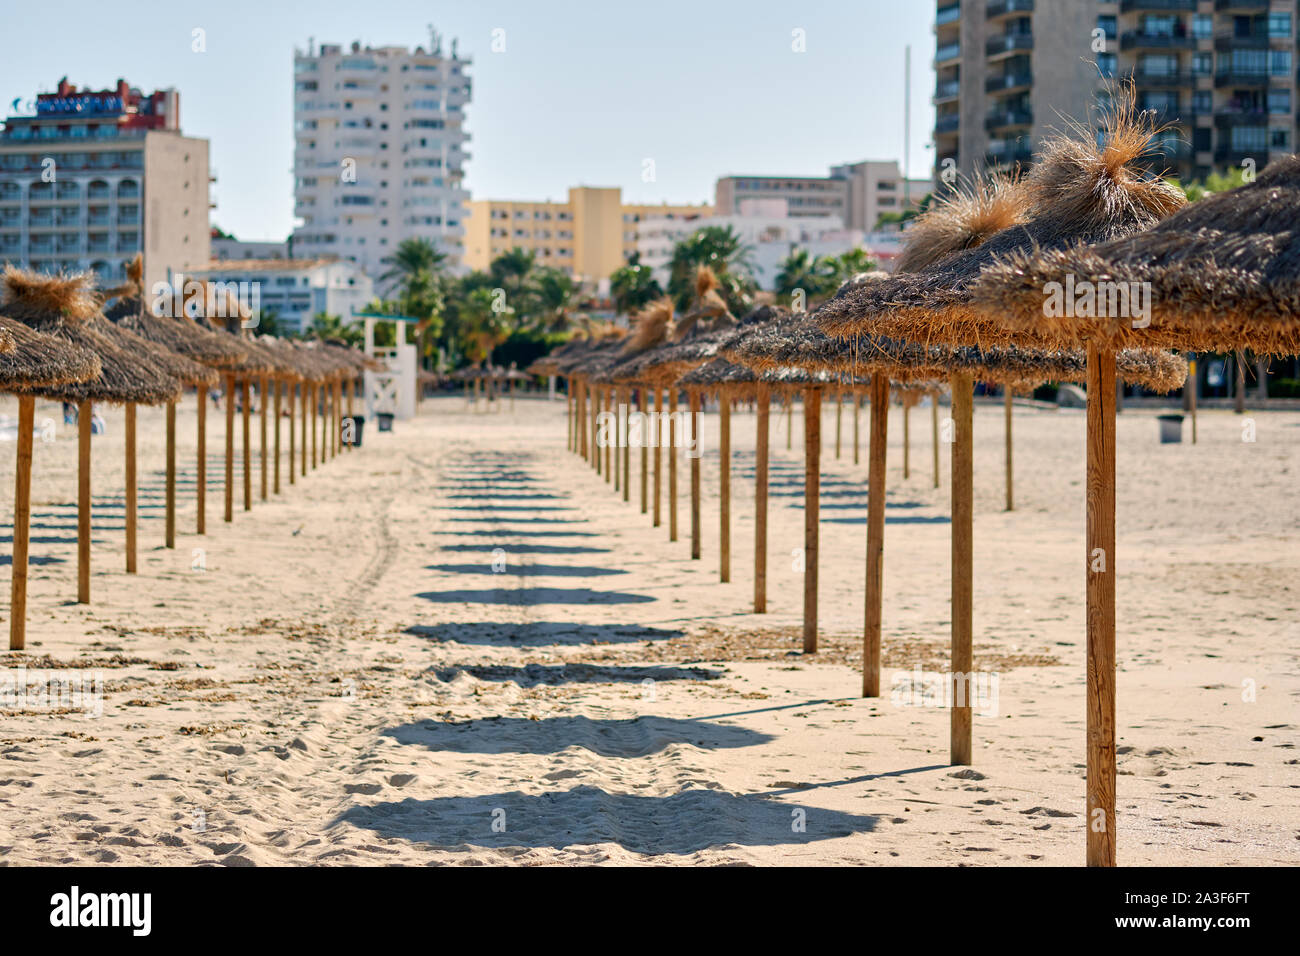 Straw parasols in a row on the sandy beach in Palma Nova district of Majorca tourist resort, Balearic Islands, Spain Stock Photo